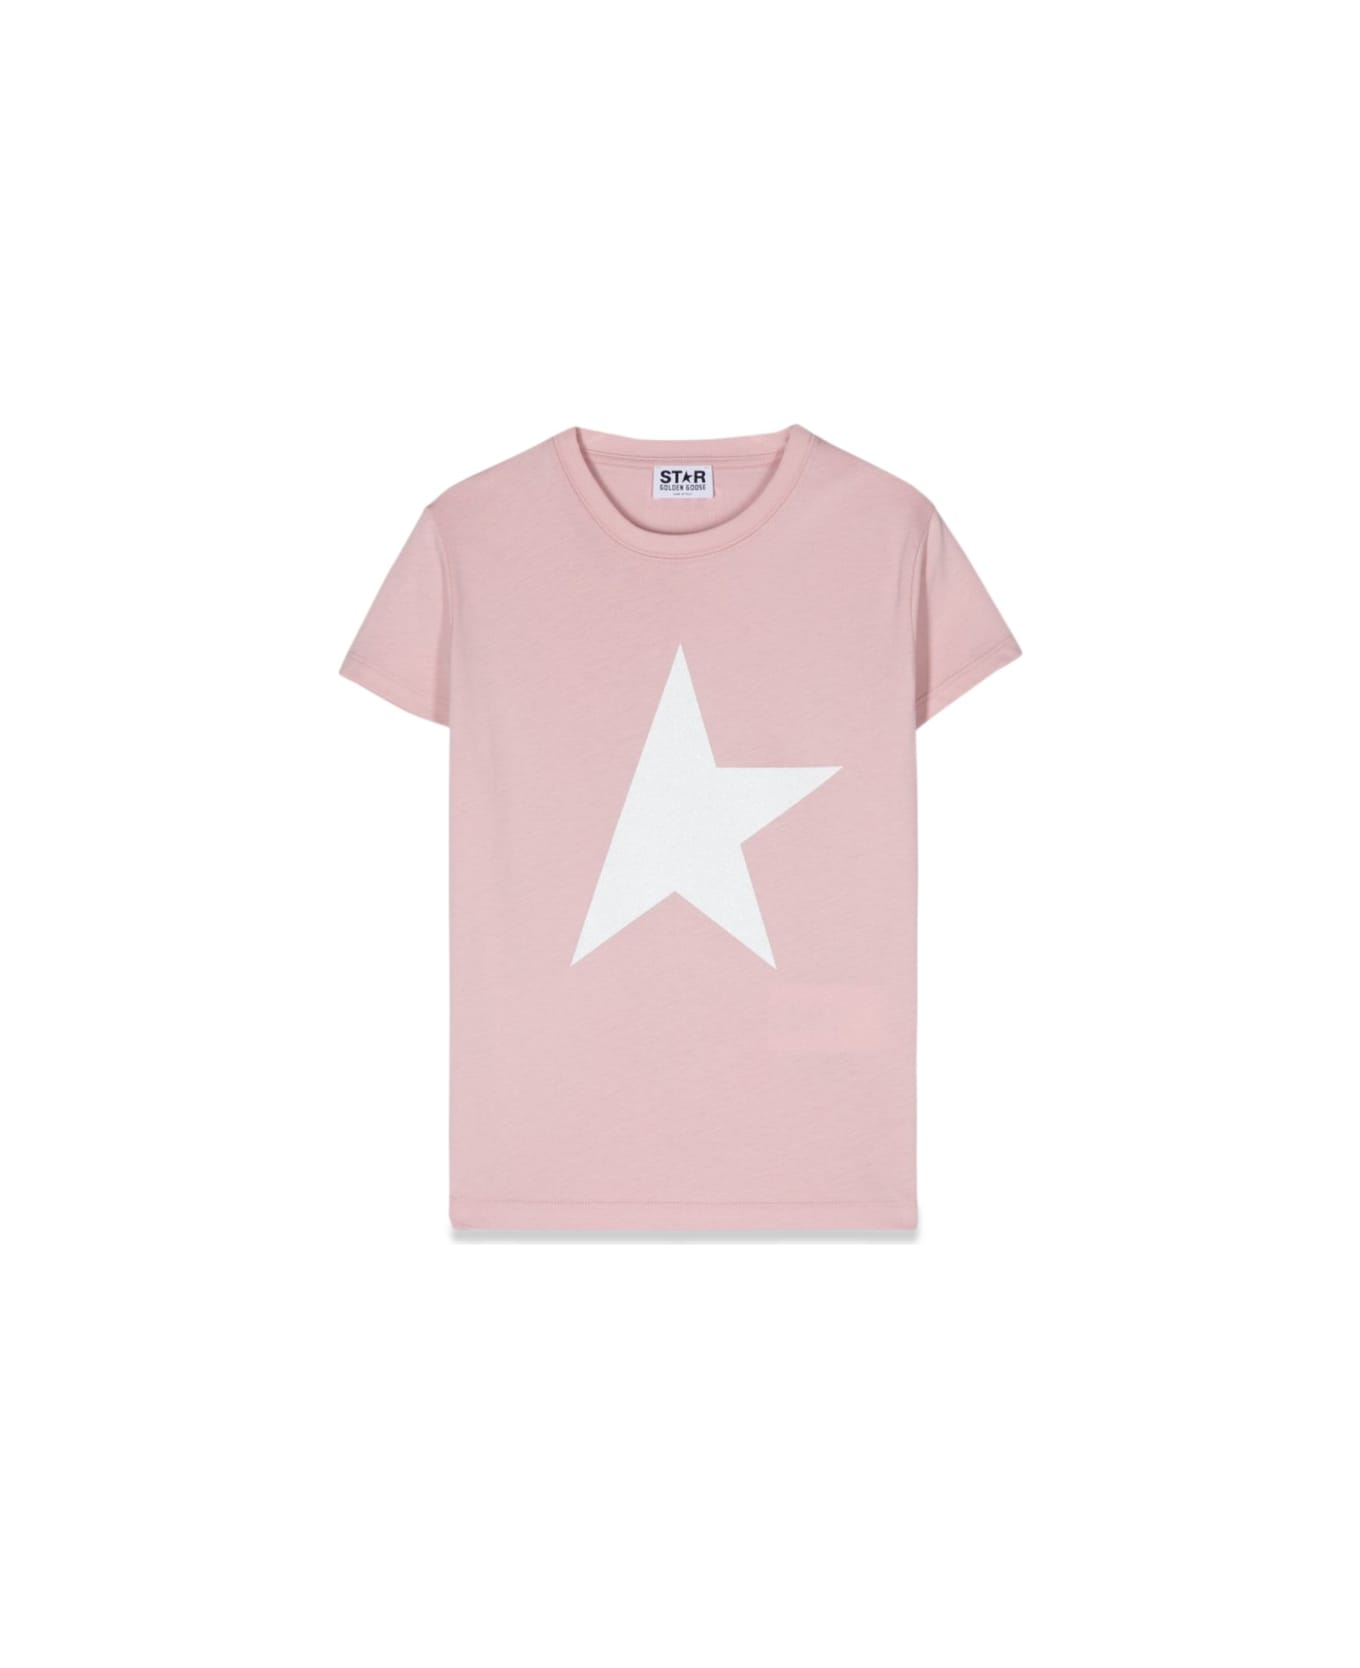 Golden Goose Star/ Girl's T-shirt S/s Logo/ Big Star Printed/ Logo - PINK